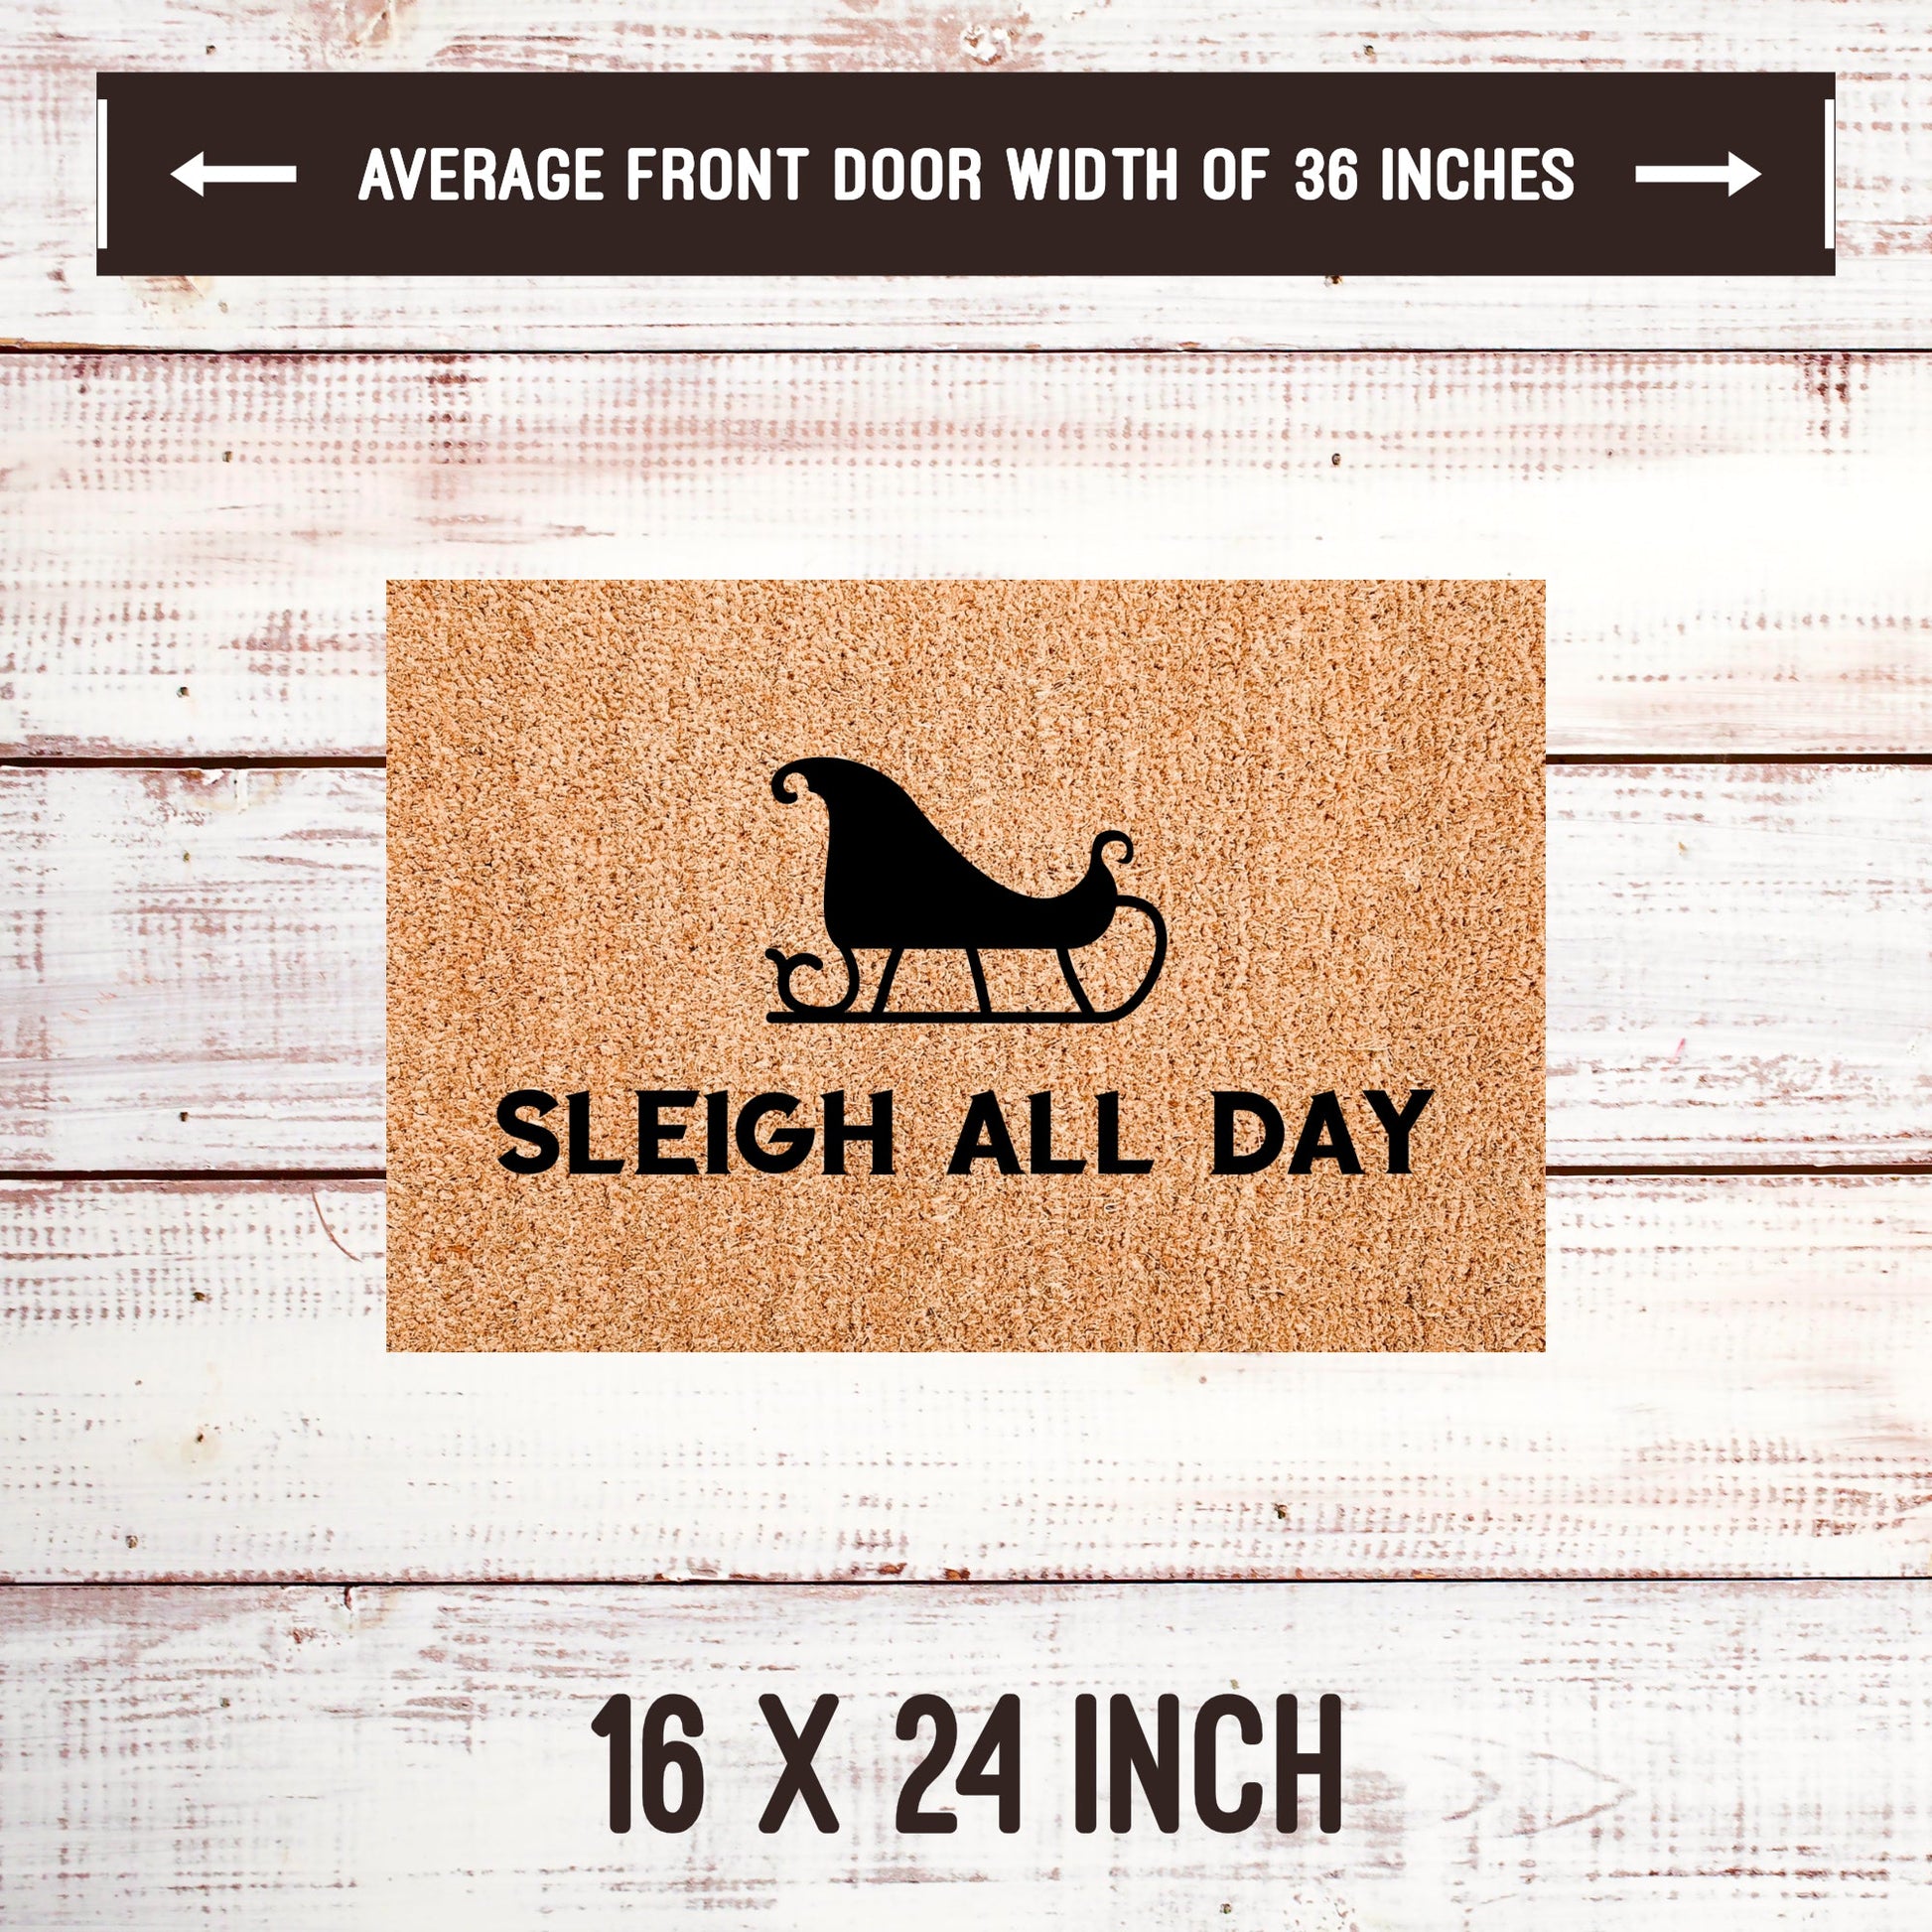 Sleigh All Day Door Mats teelaunch 16x24 Inches 